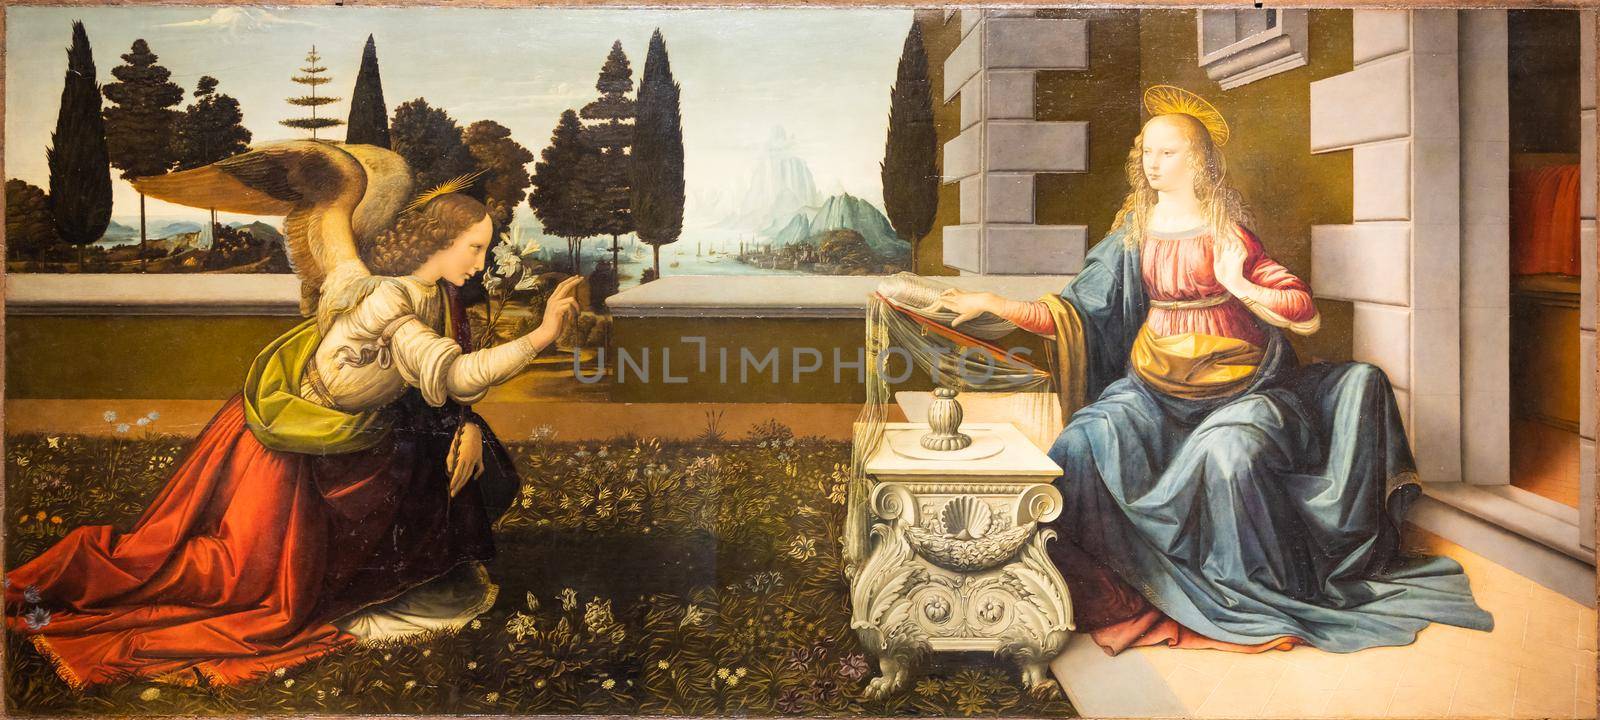 Florence, Italy - Circa June 2021: Leonardo Da Vinci, Annunciation, 1475 - oil on wood. by Perseomedusa